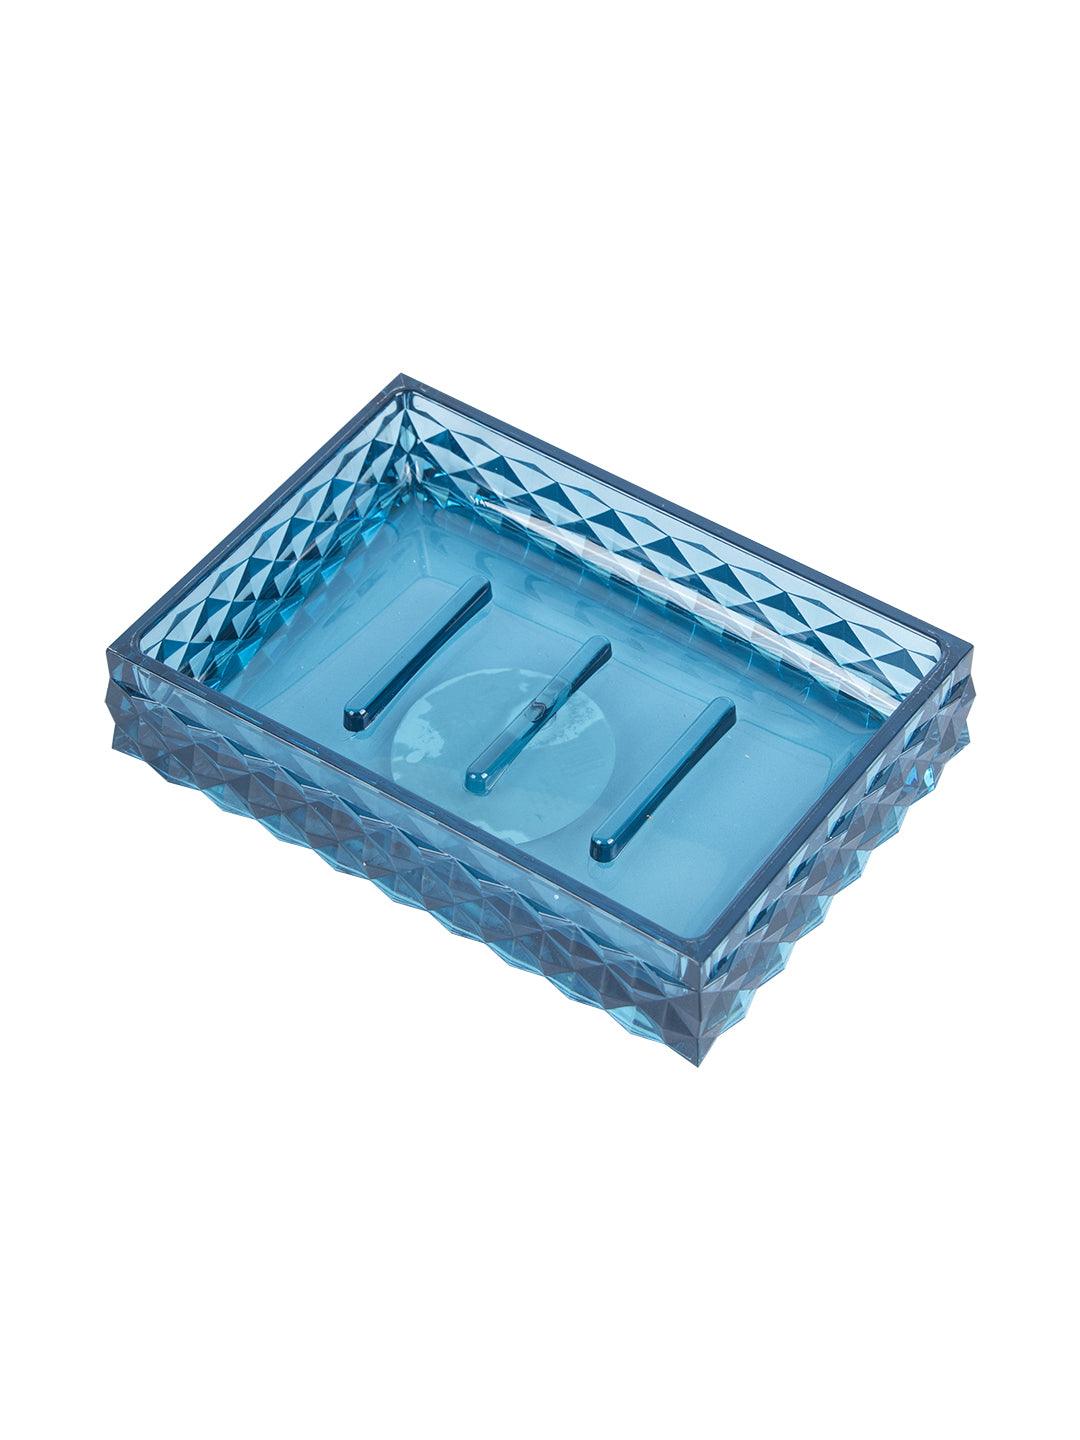 Market99 Soap Dish Holder, Rectangular Shape Blue Plastic Soap Holder - MARKET 99